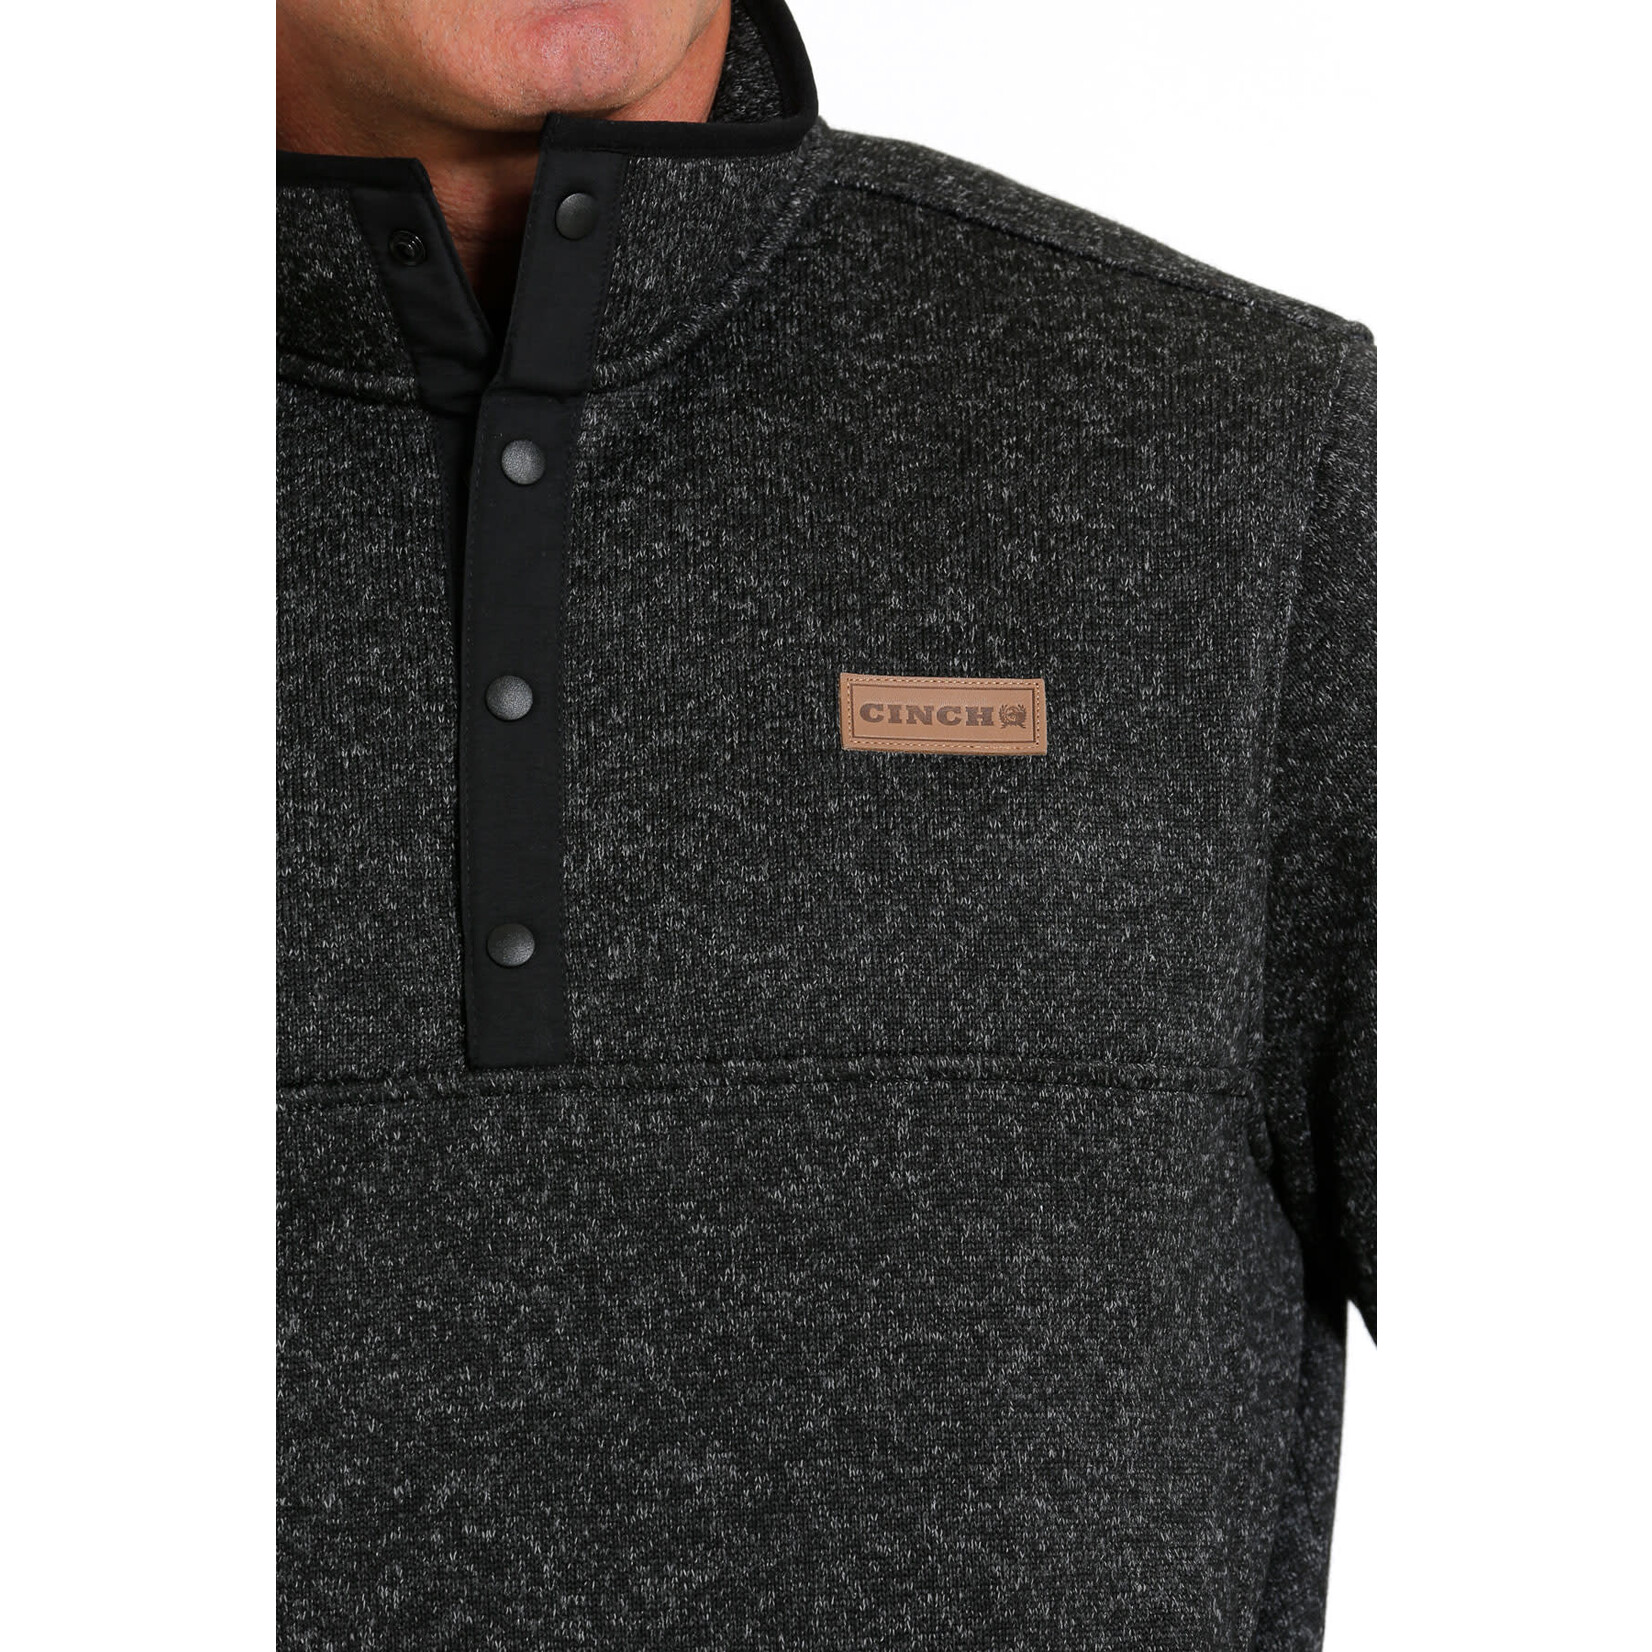 Cinch Cinch MWK1534004 Men's Pullover Sweater Charcoal